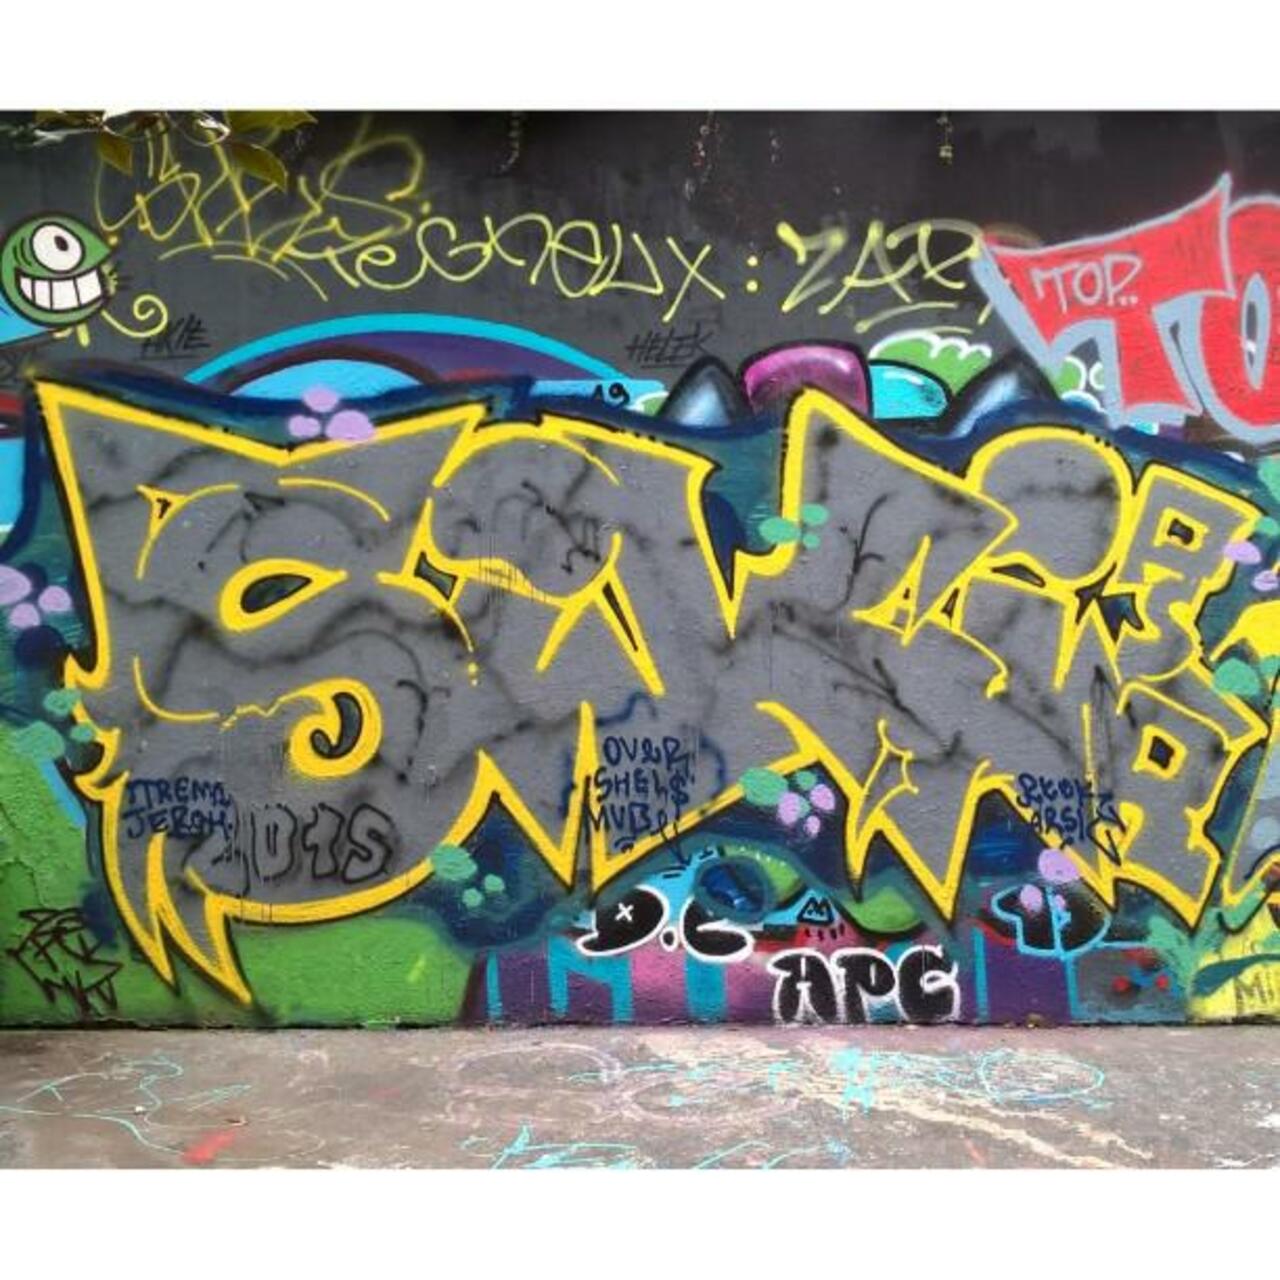 #Paris #graffiti photo by @maxdimontemarciano http://ift.tt/1FYAHGw #StreetArt http://t.co/NbNqRITqVZ